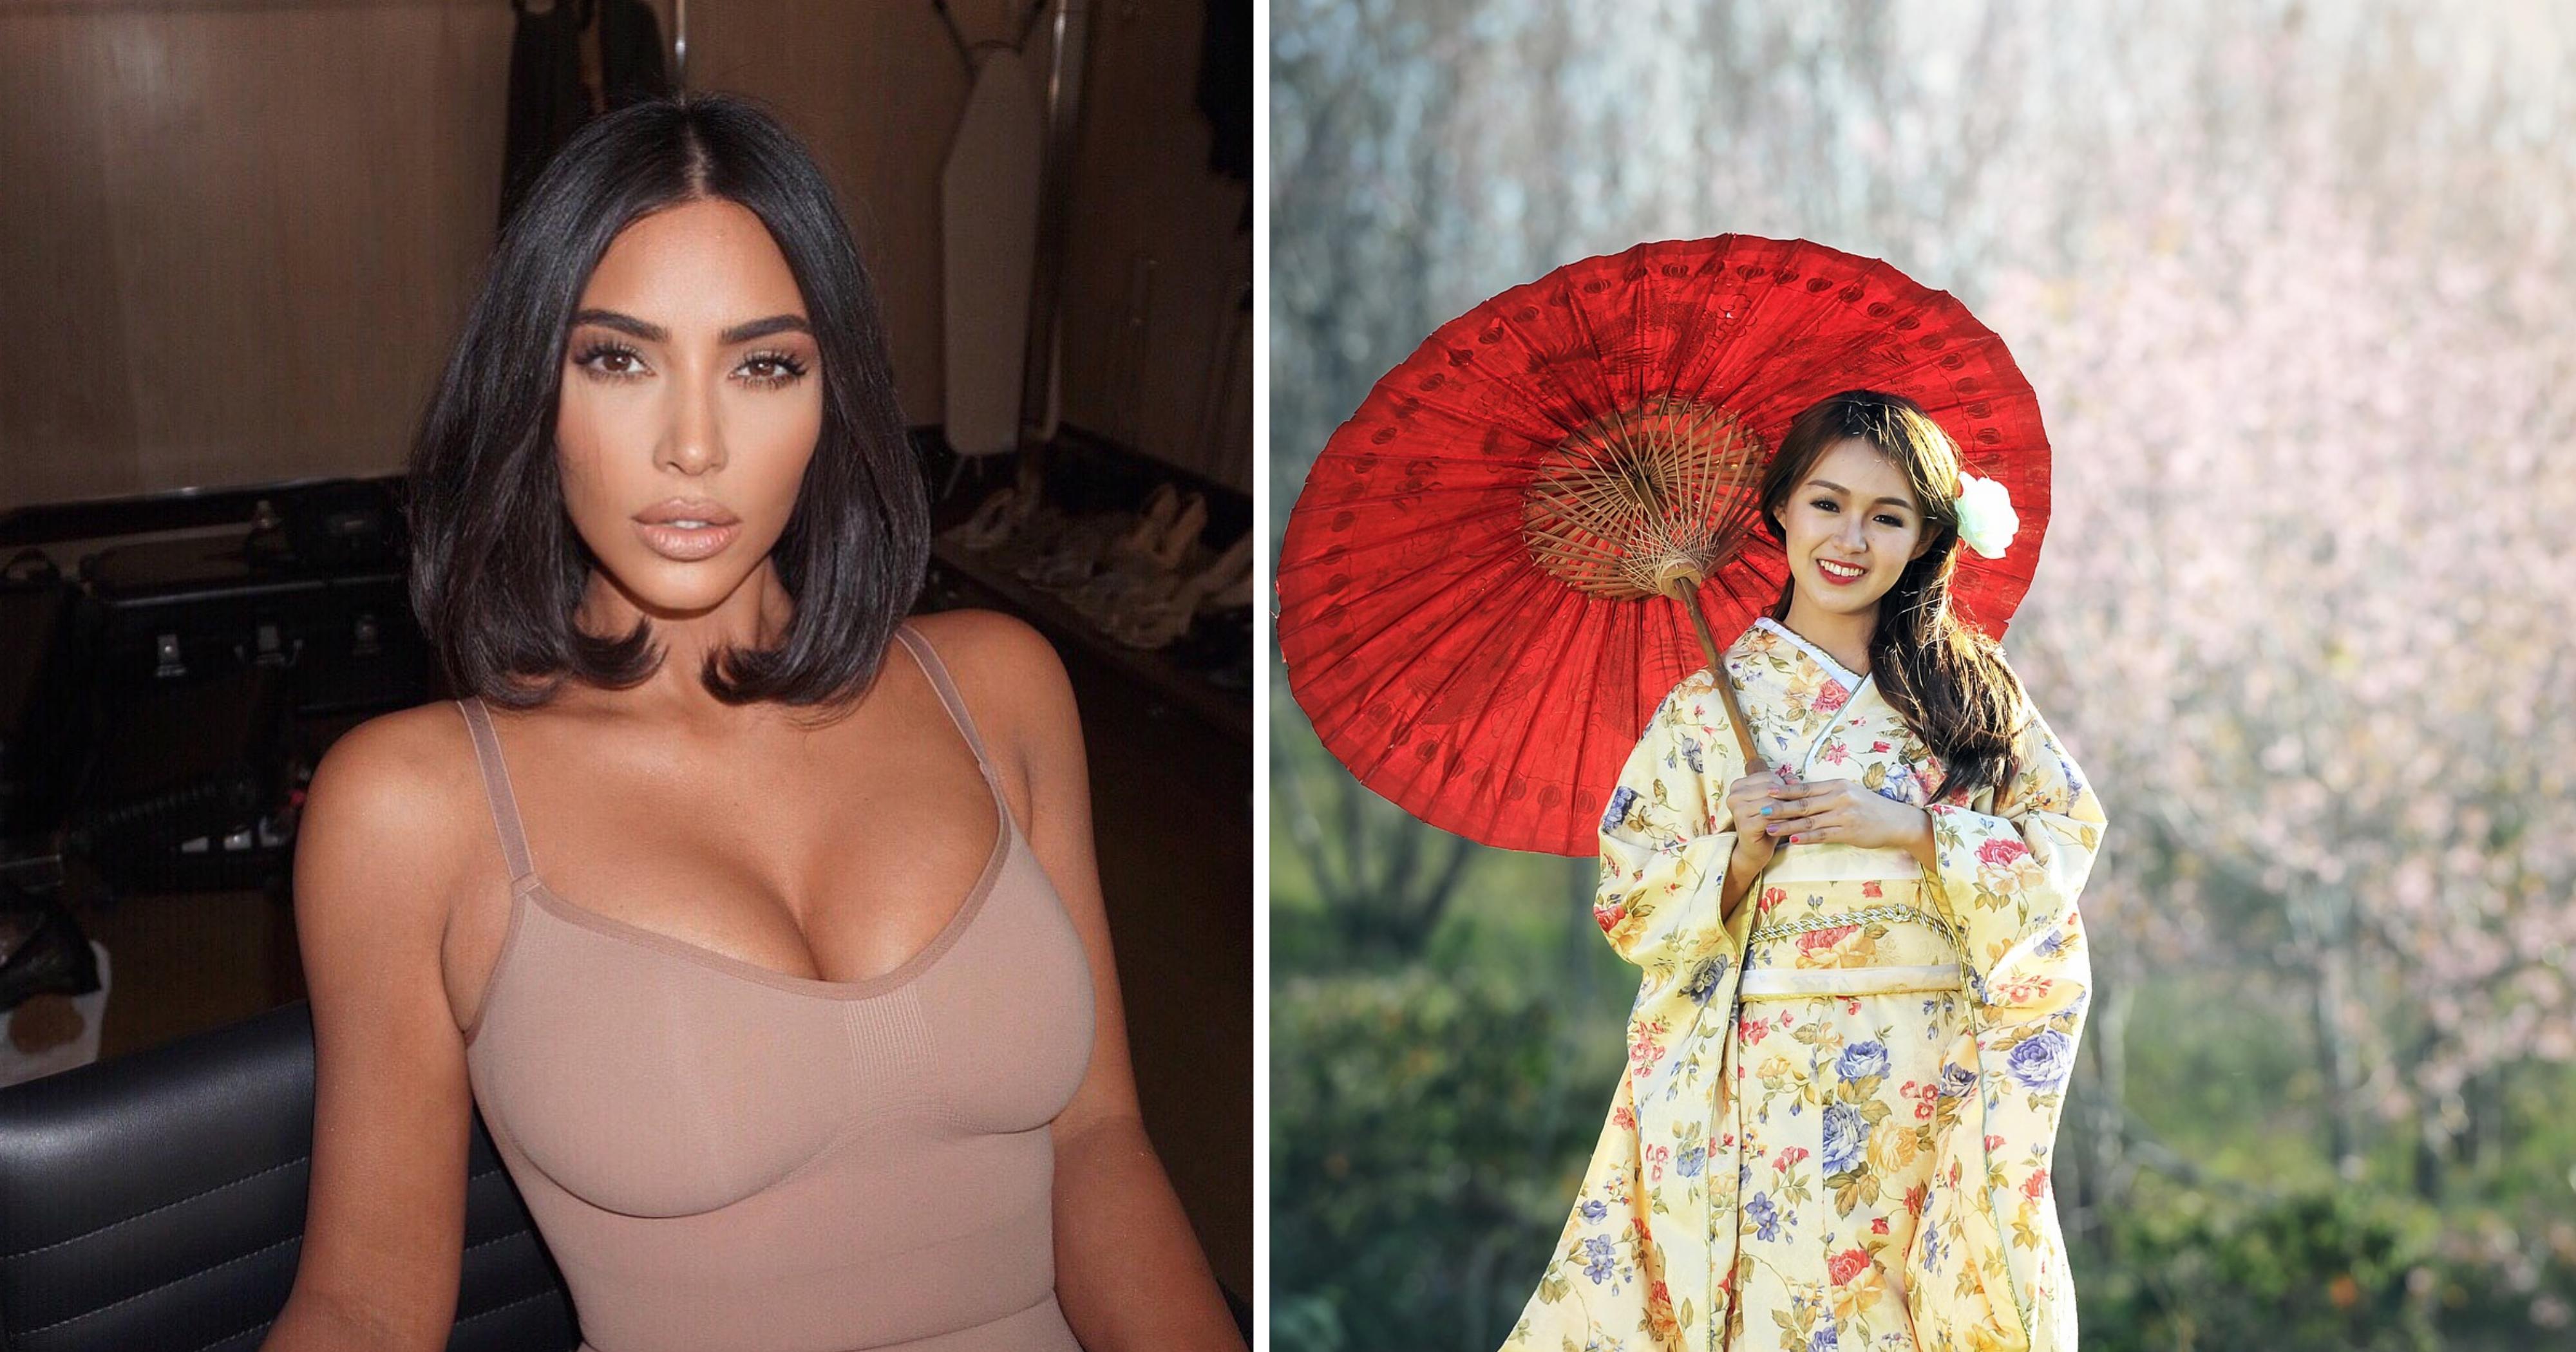 Kim Kardashian will rename her “Kimono” shapewear line backlash - Vox